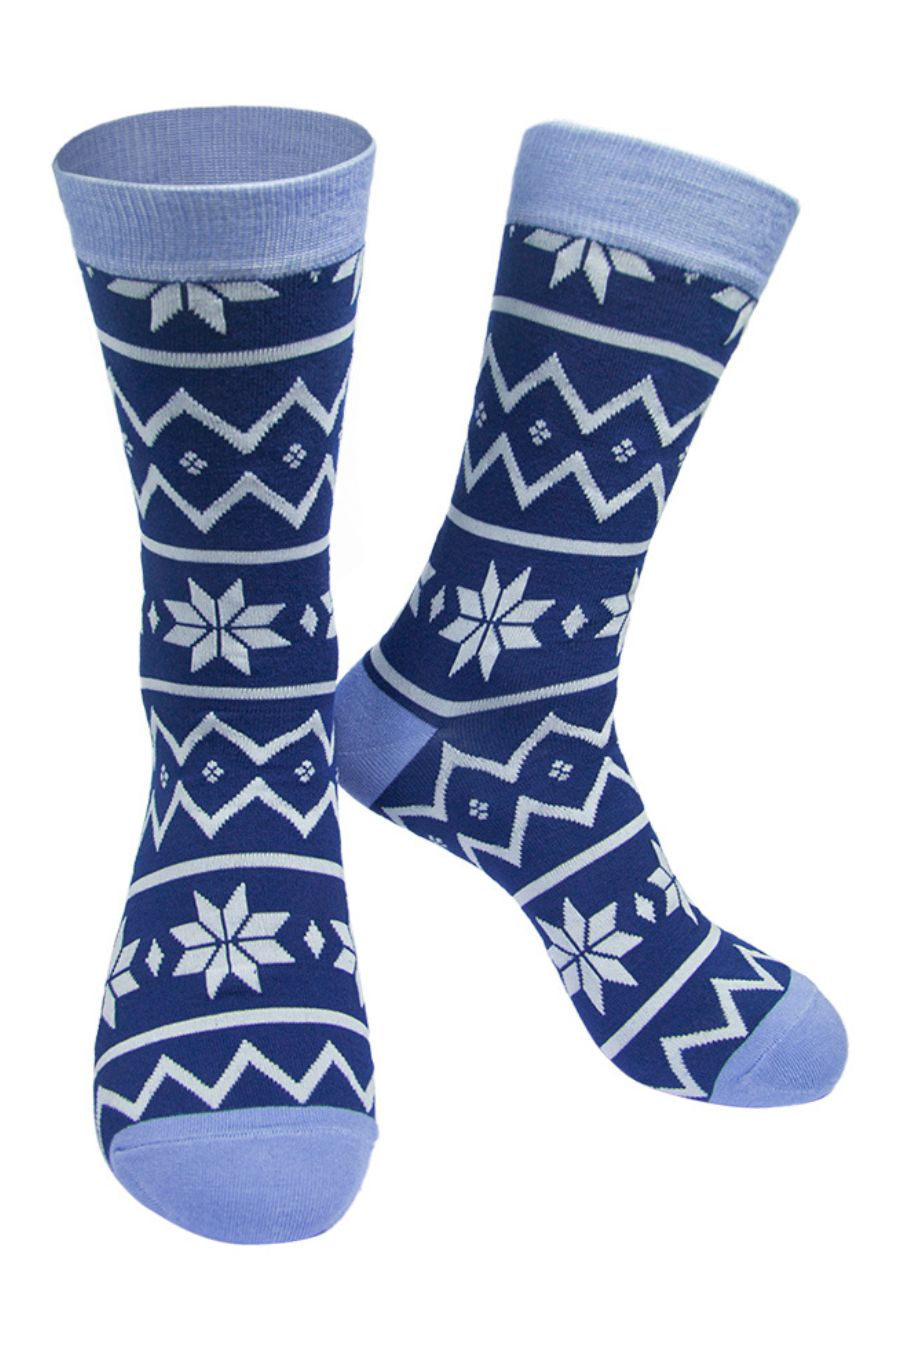 blue bamboo dress socks with a white fair isle pattern